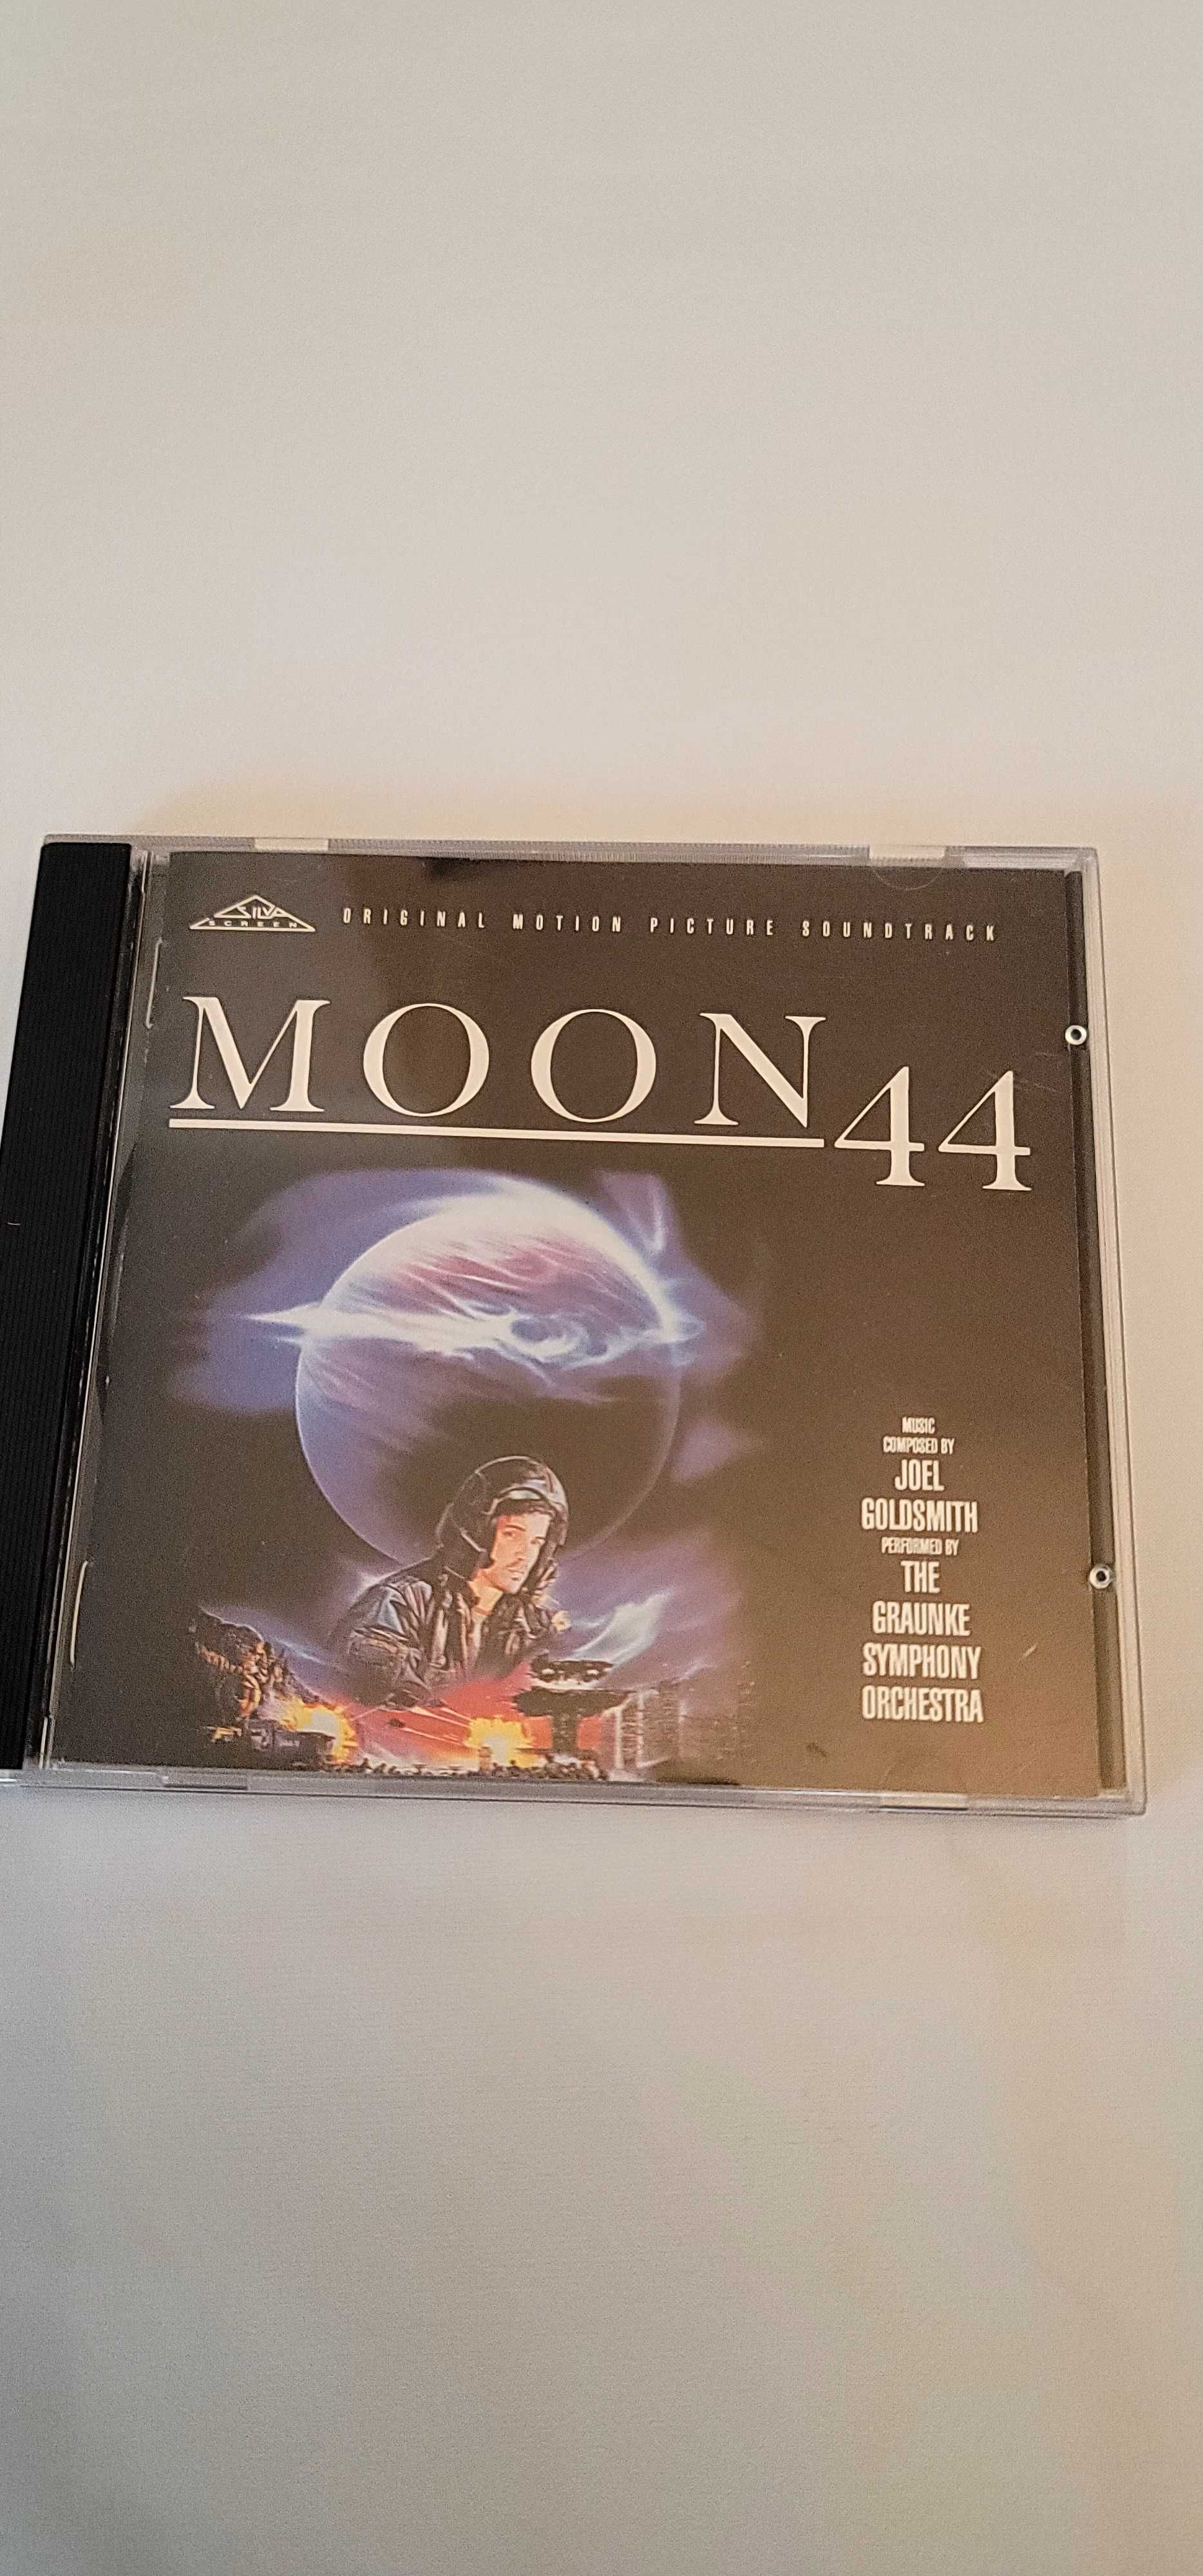 MOON 44 - soundtrack CD